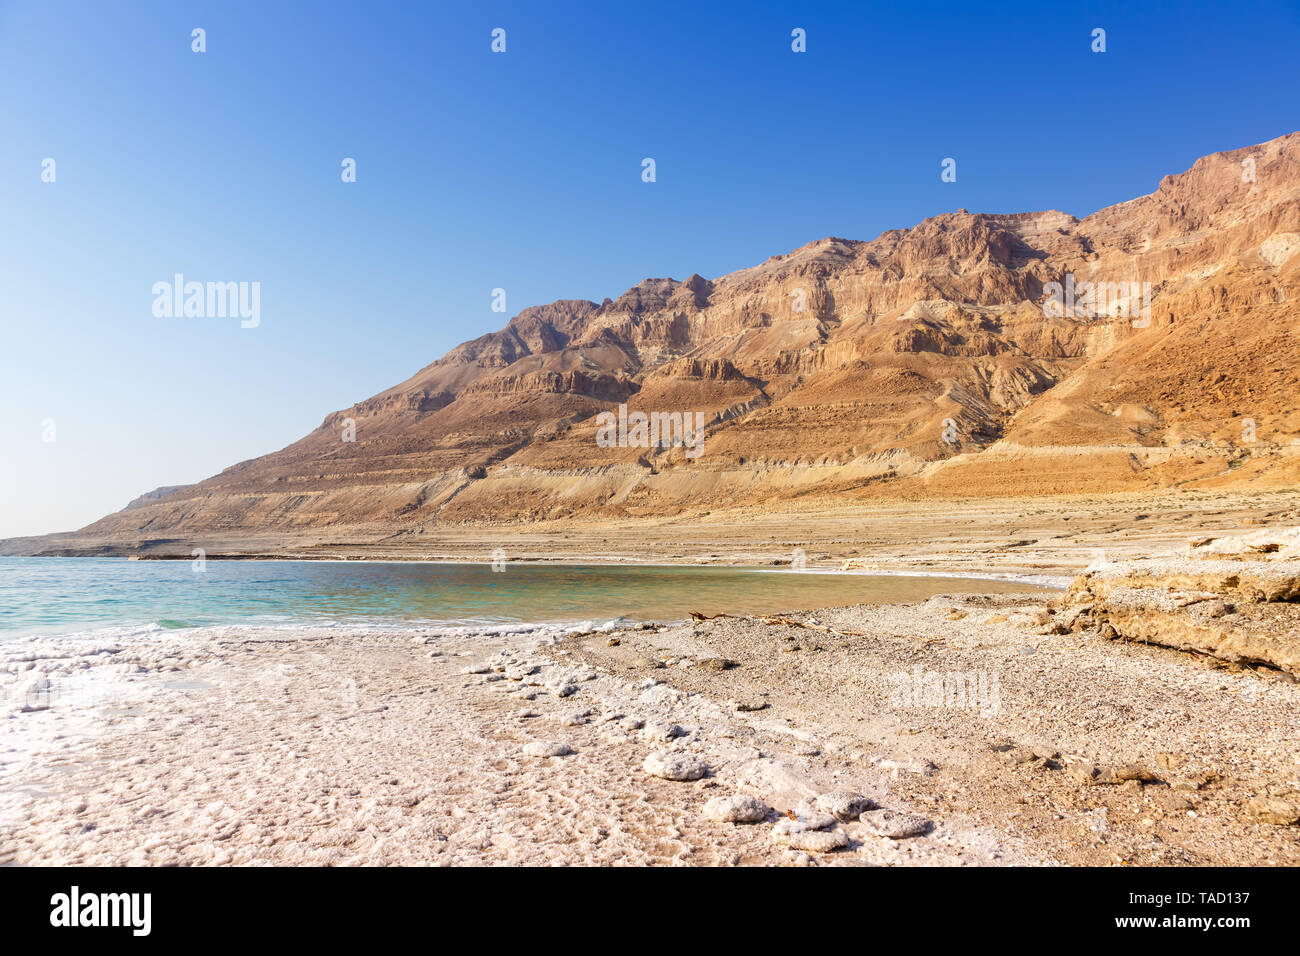 Dead Sea Israel landscape copyspace copy space nature vacation holidays Stock Photo